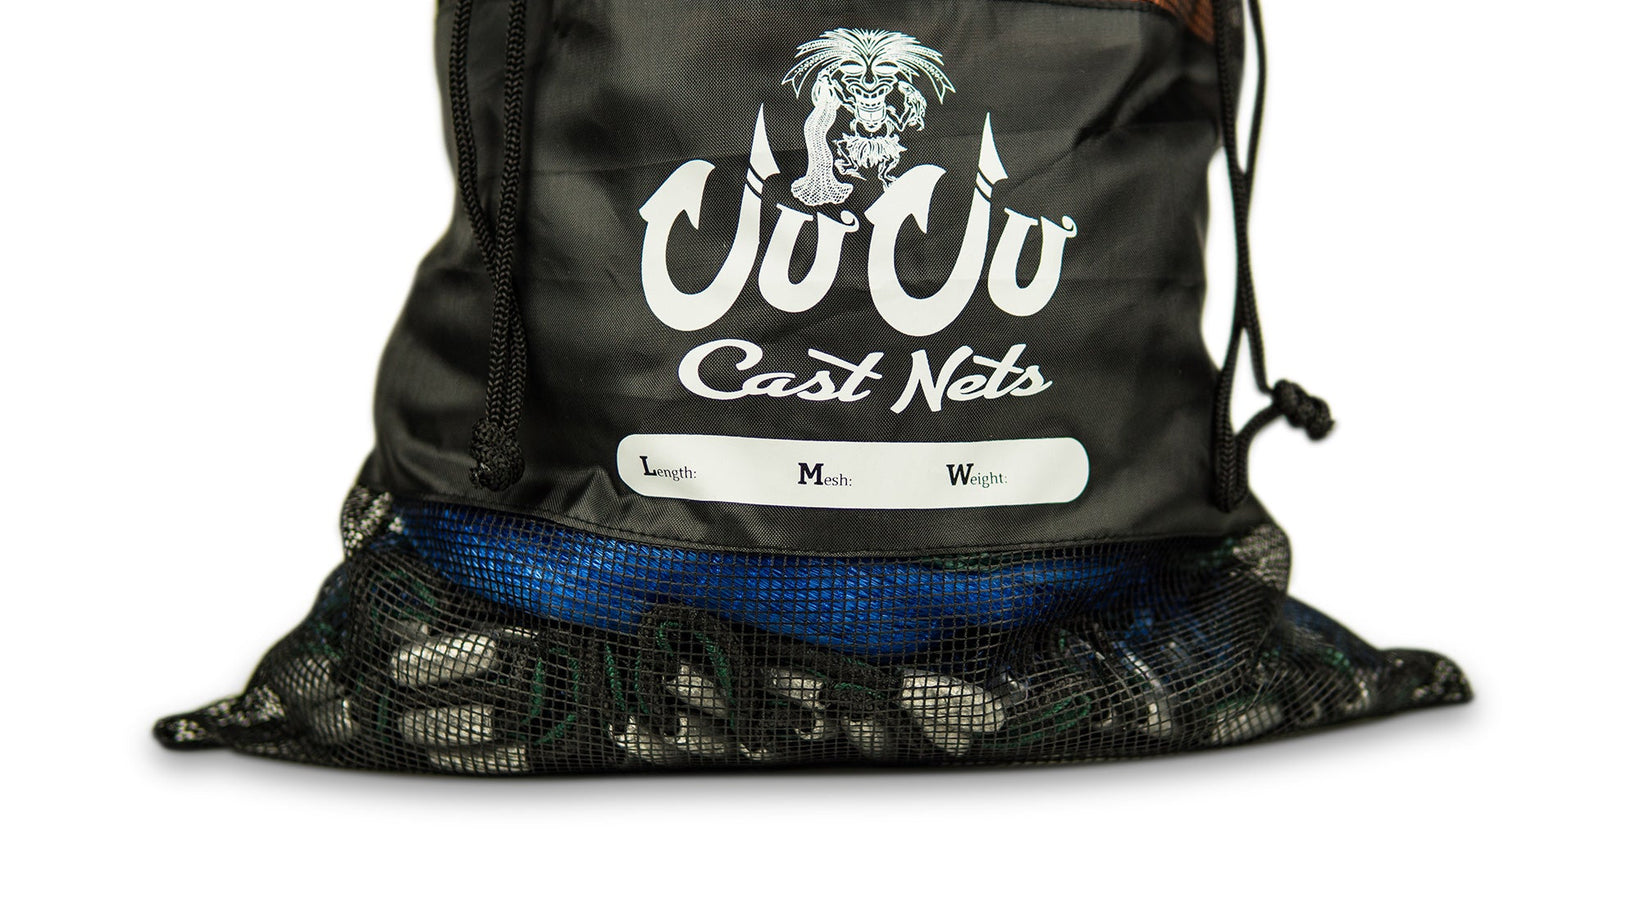 JuJu Cast Net Storage Bag –